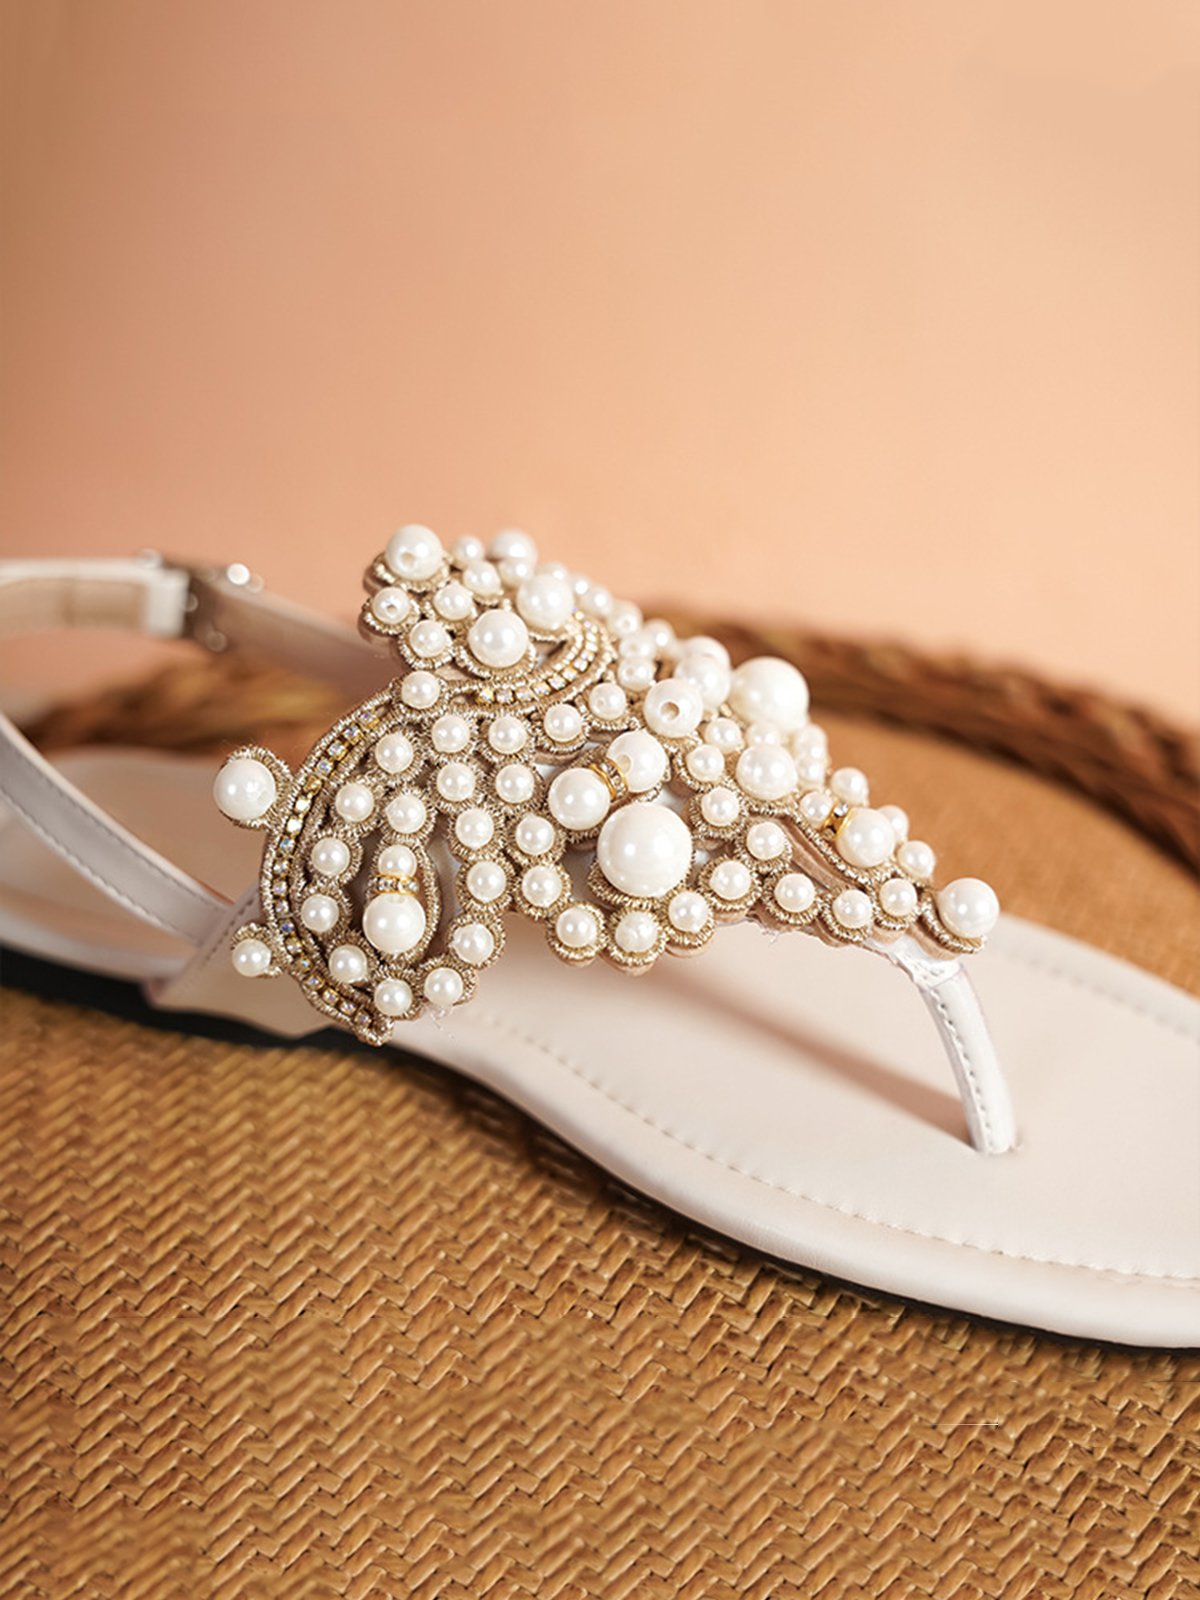 Elegant Imitation Pearl Adjustable Buckle Thong Sandals